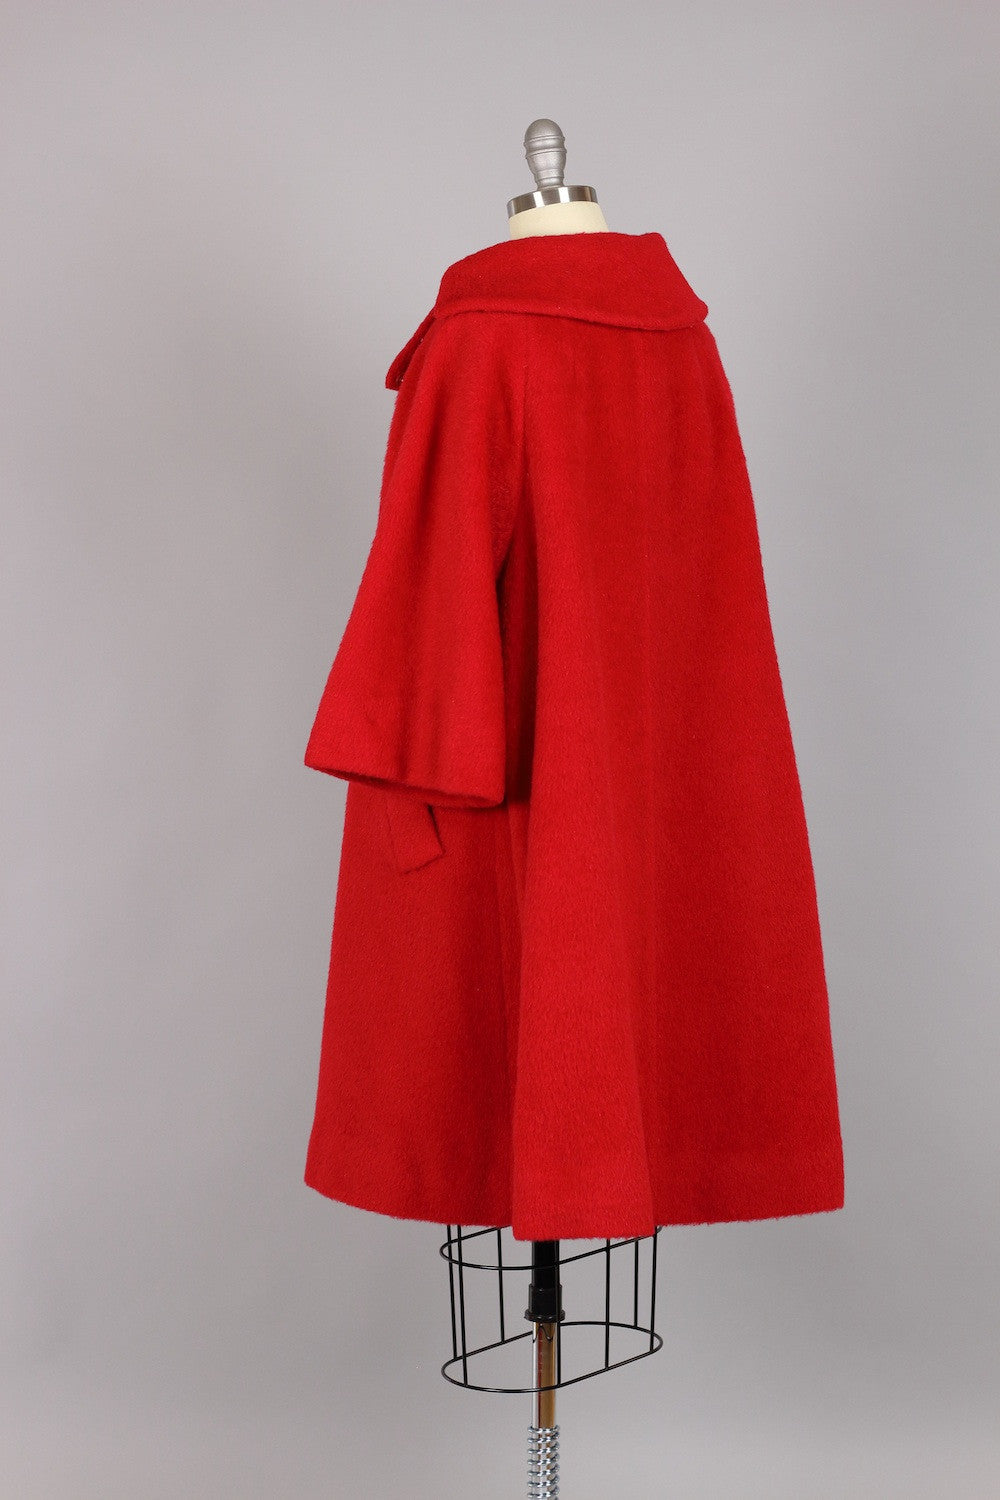 Lipstick Red 'Tisse a Paris' for Lilli Ann Vintage 1960s Swing Coat